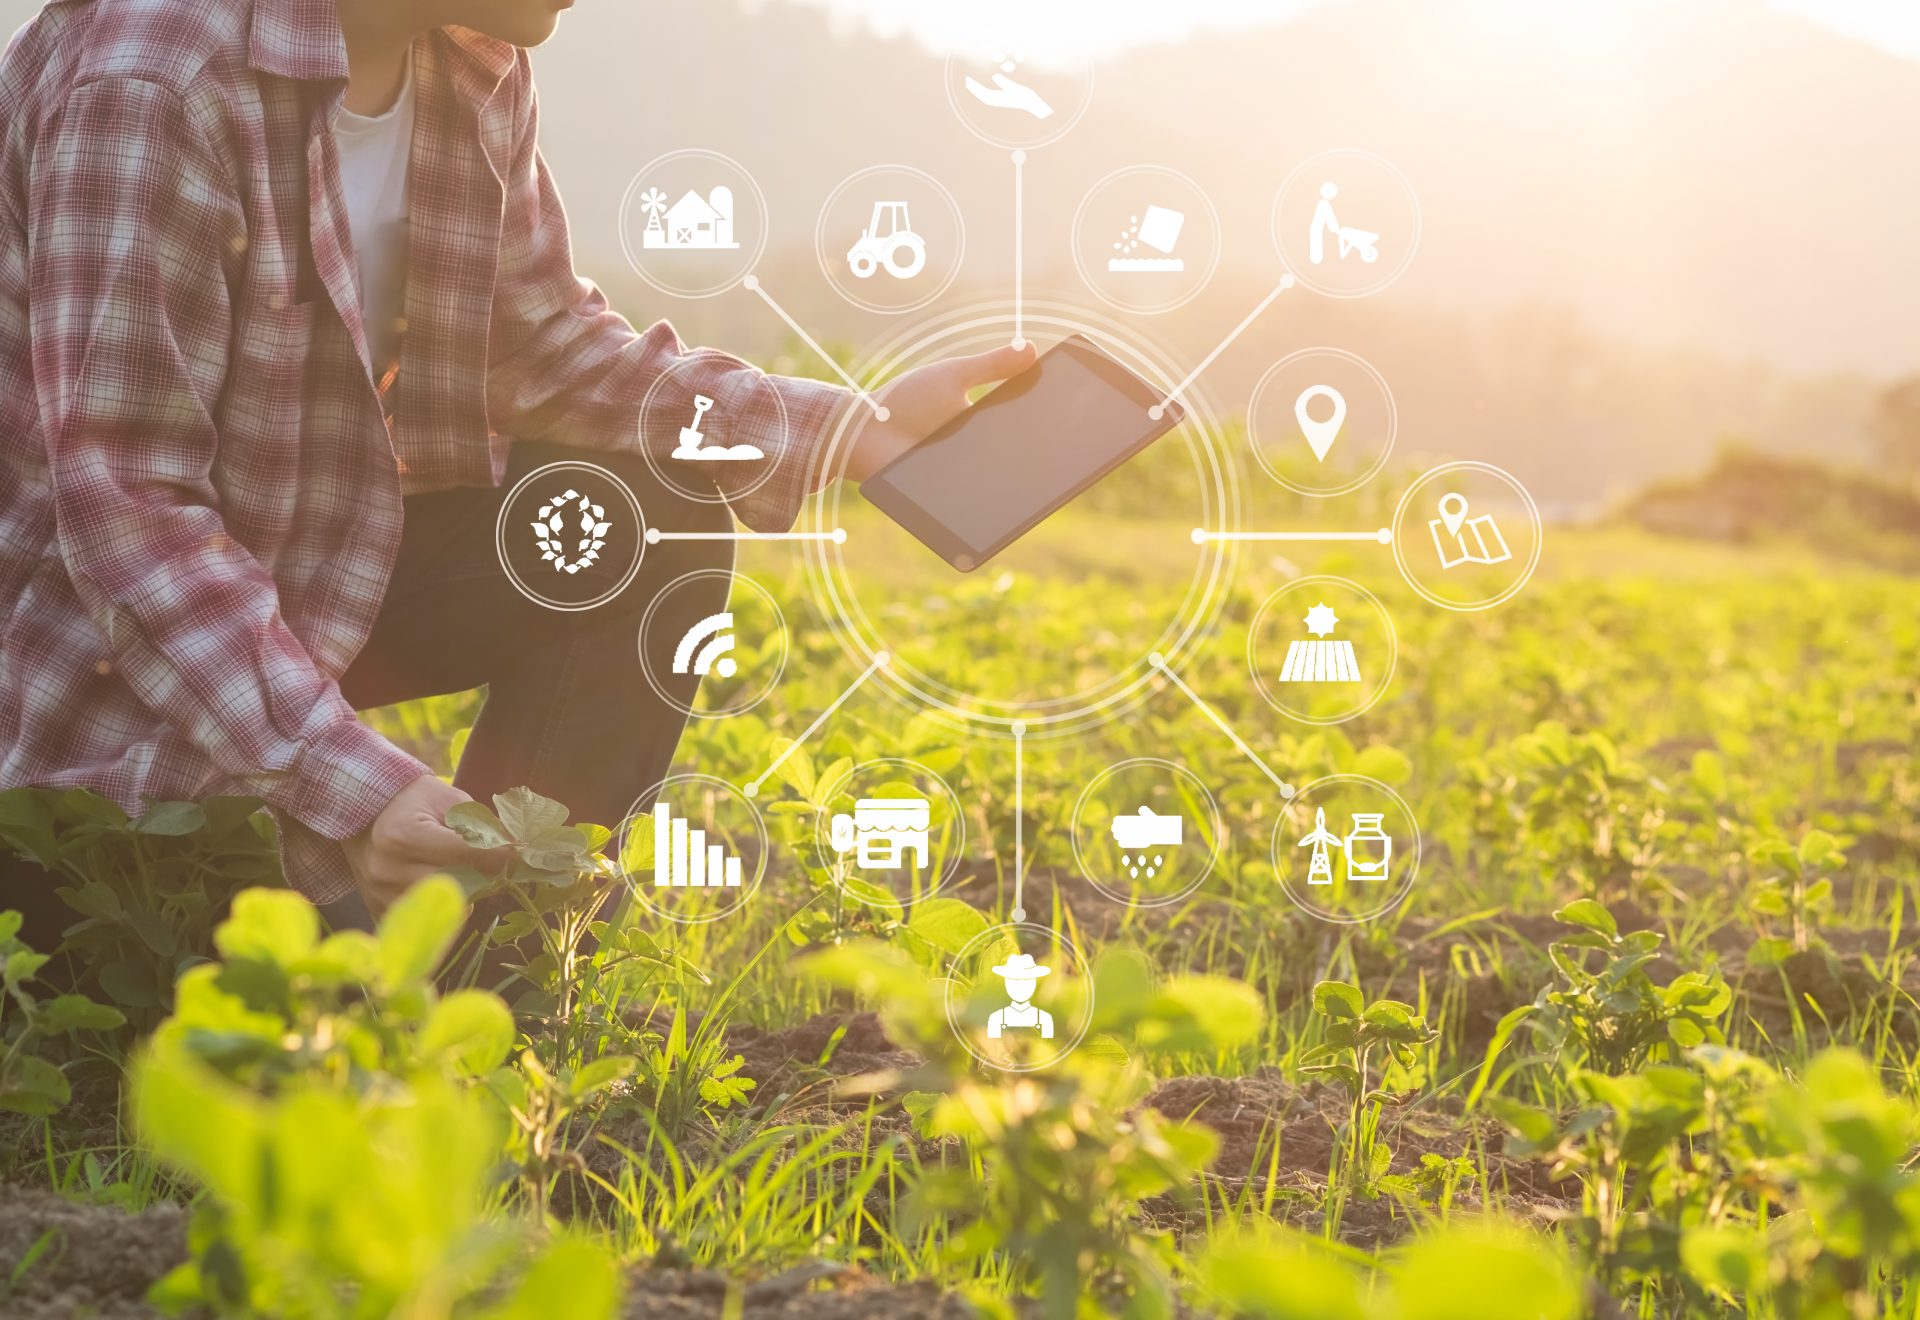 digitalizacija poljoprivrede